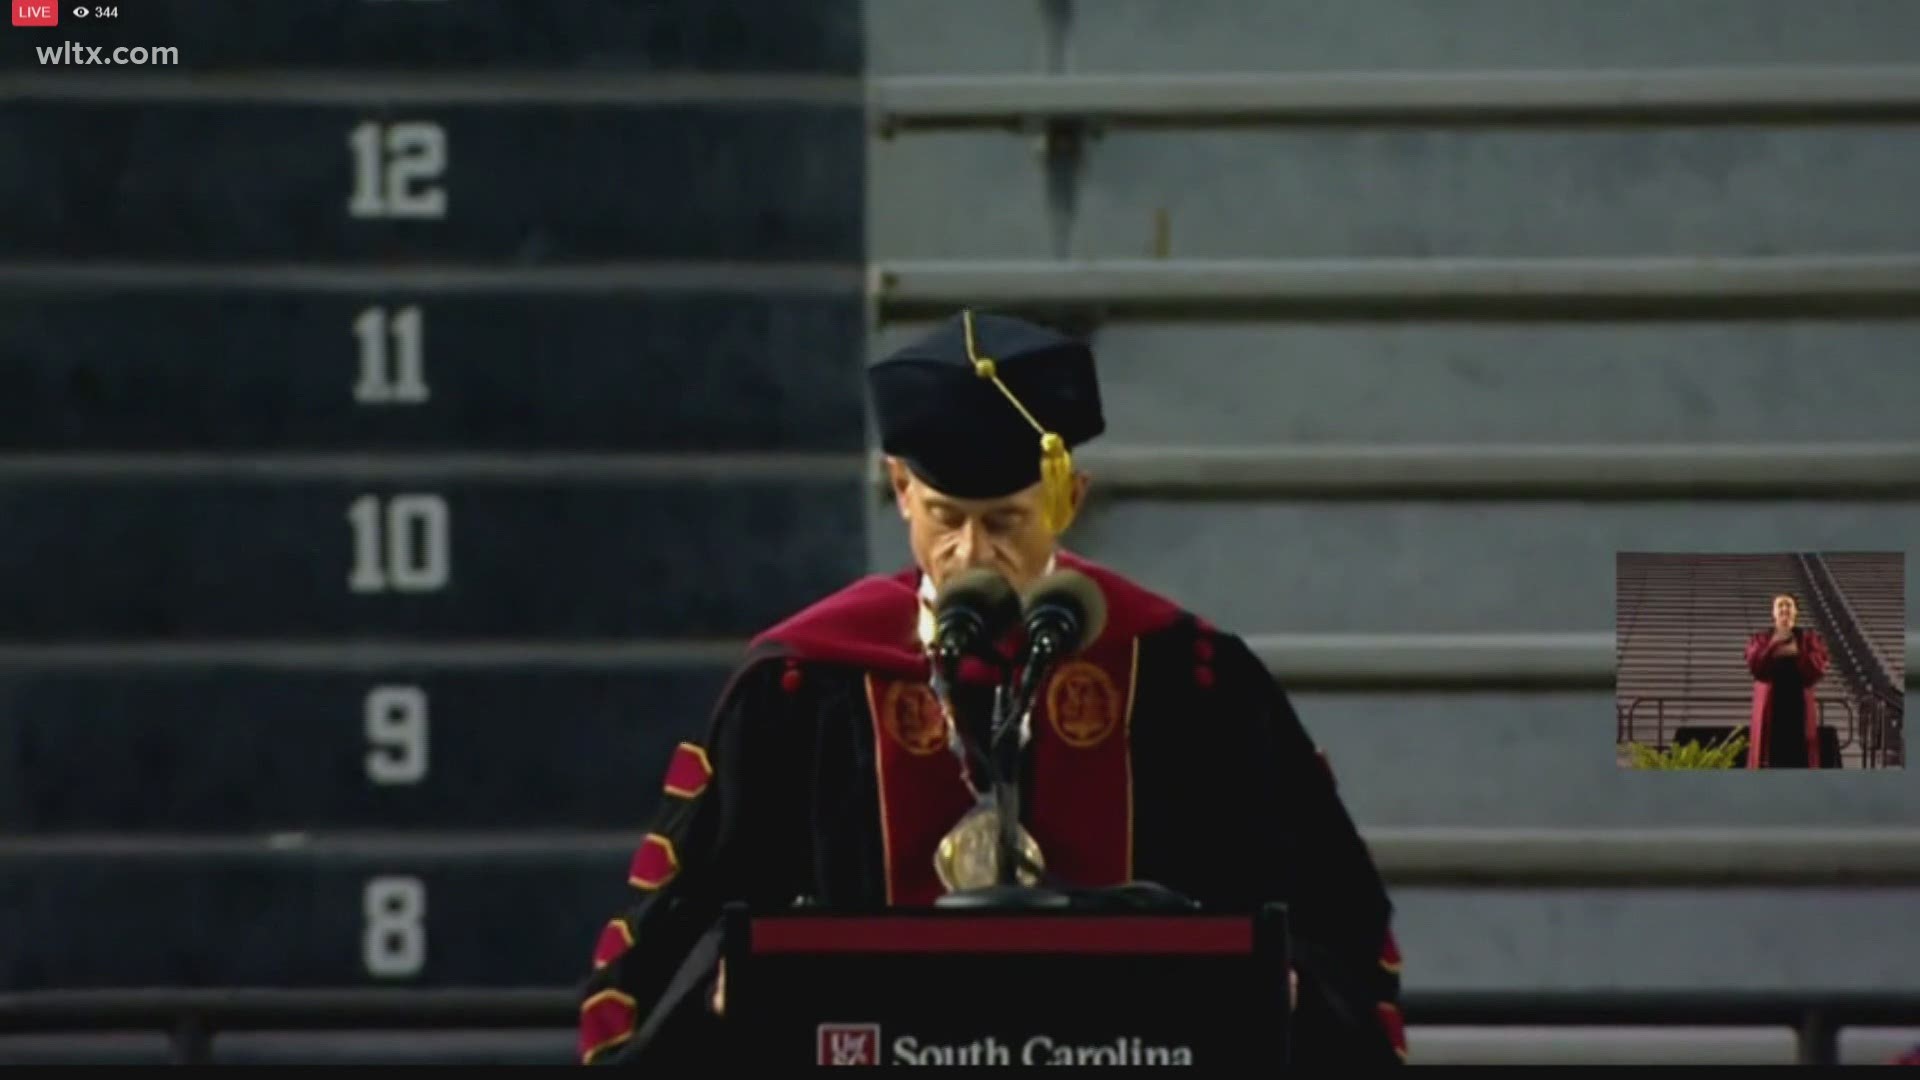 University of South Carolina President Bob Caslen mistakenly congratulated "University of California' graduates at